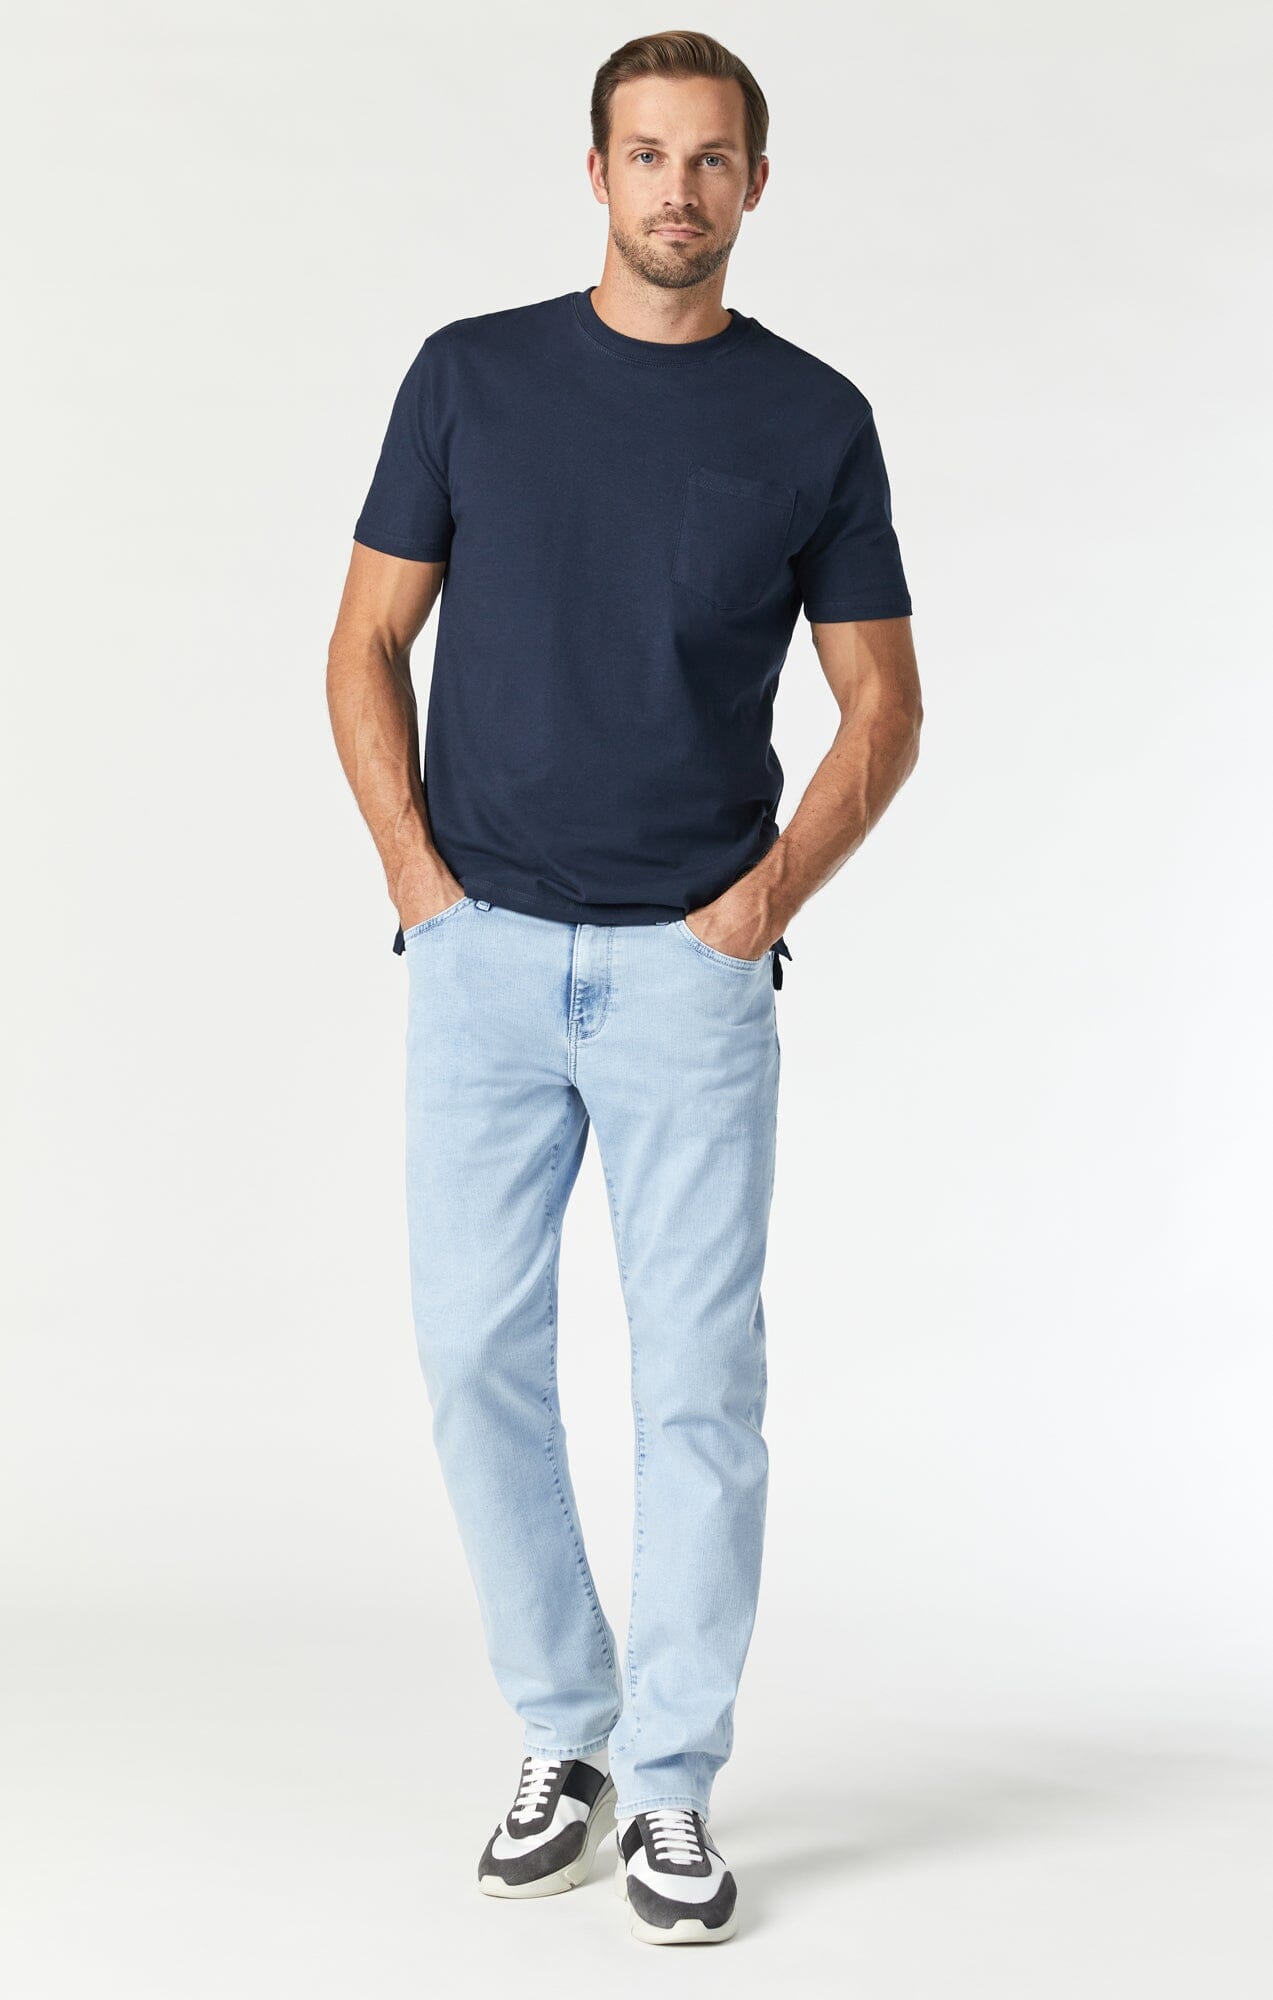 Men's Blue Jeans, Light & Dark Blue Jeans